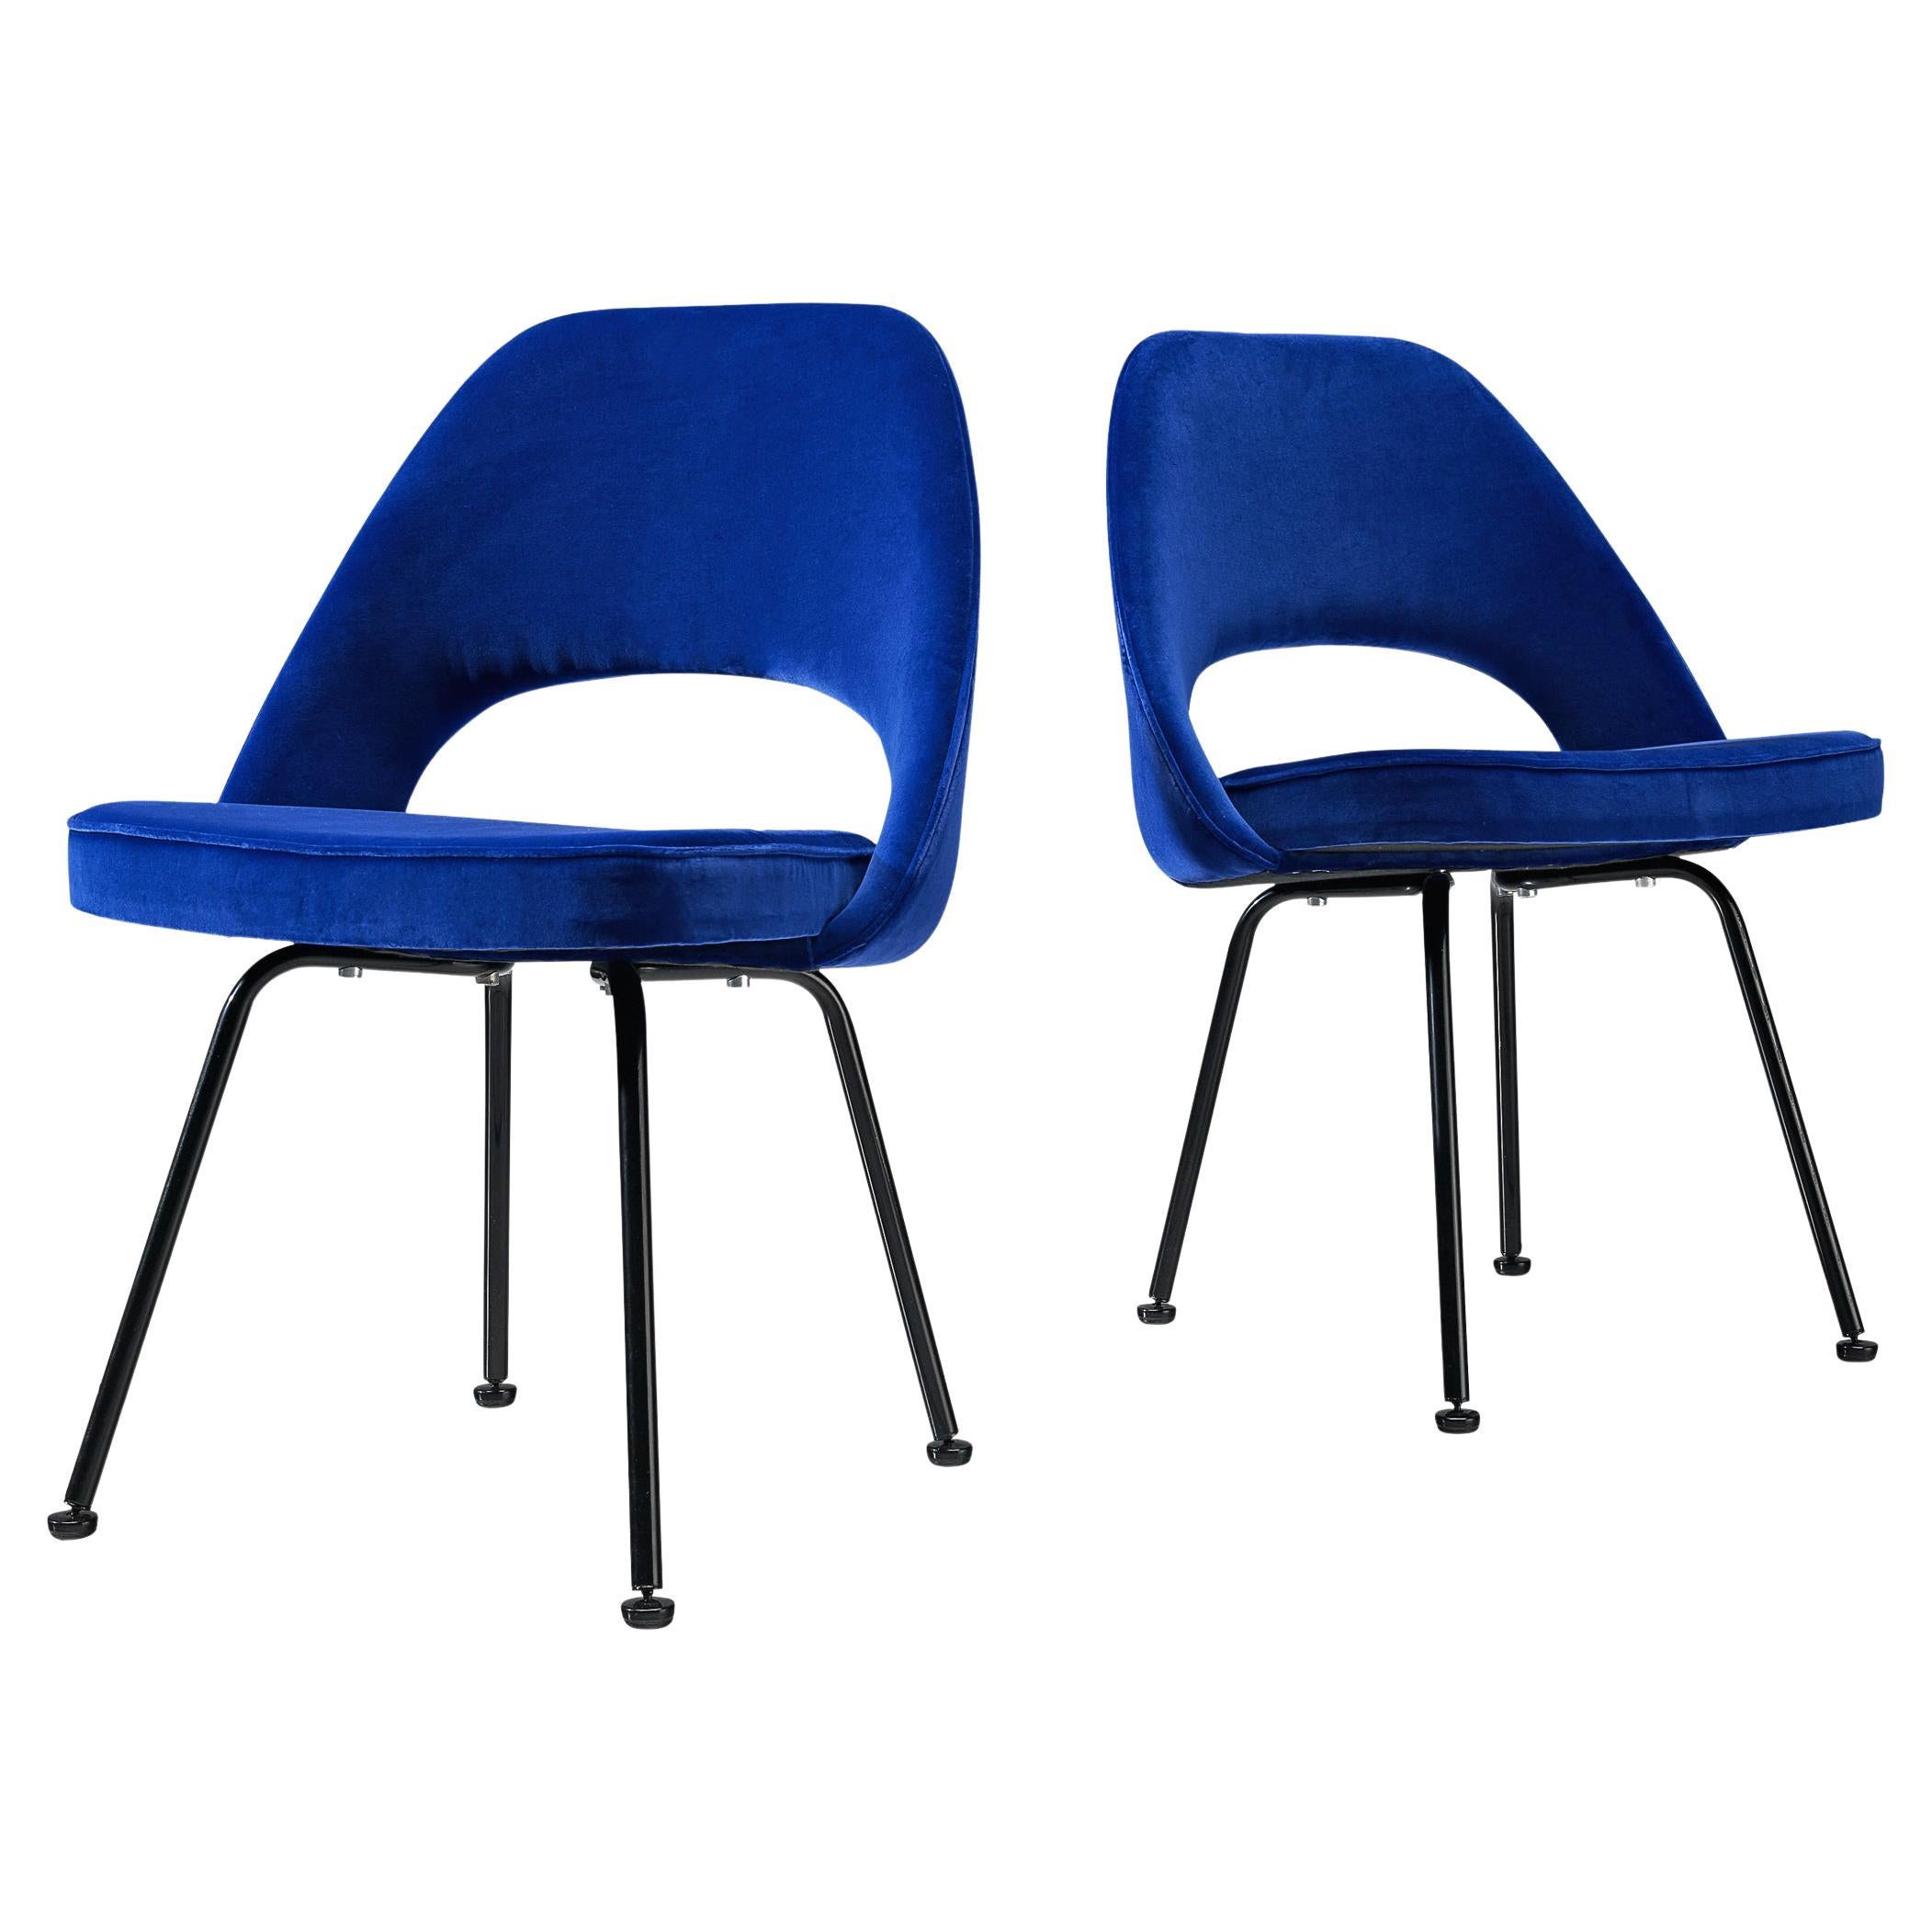 Eero Saarinen for Knoll Pair of Dining Chairs in Lapis Lazuli Velvet Upholstery